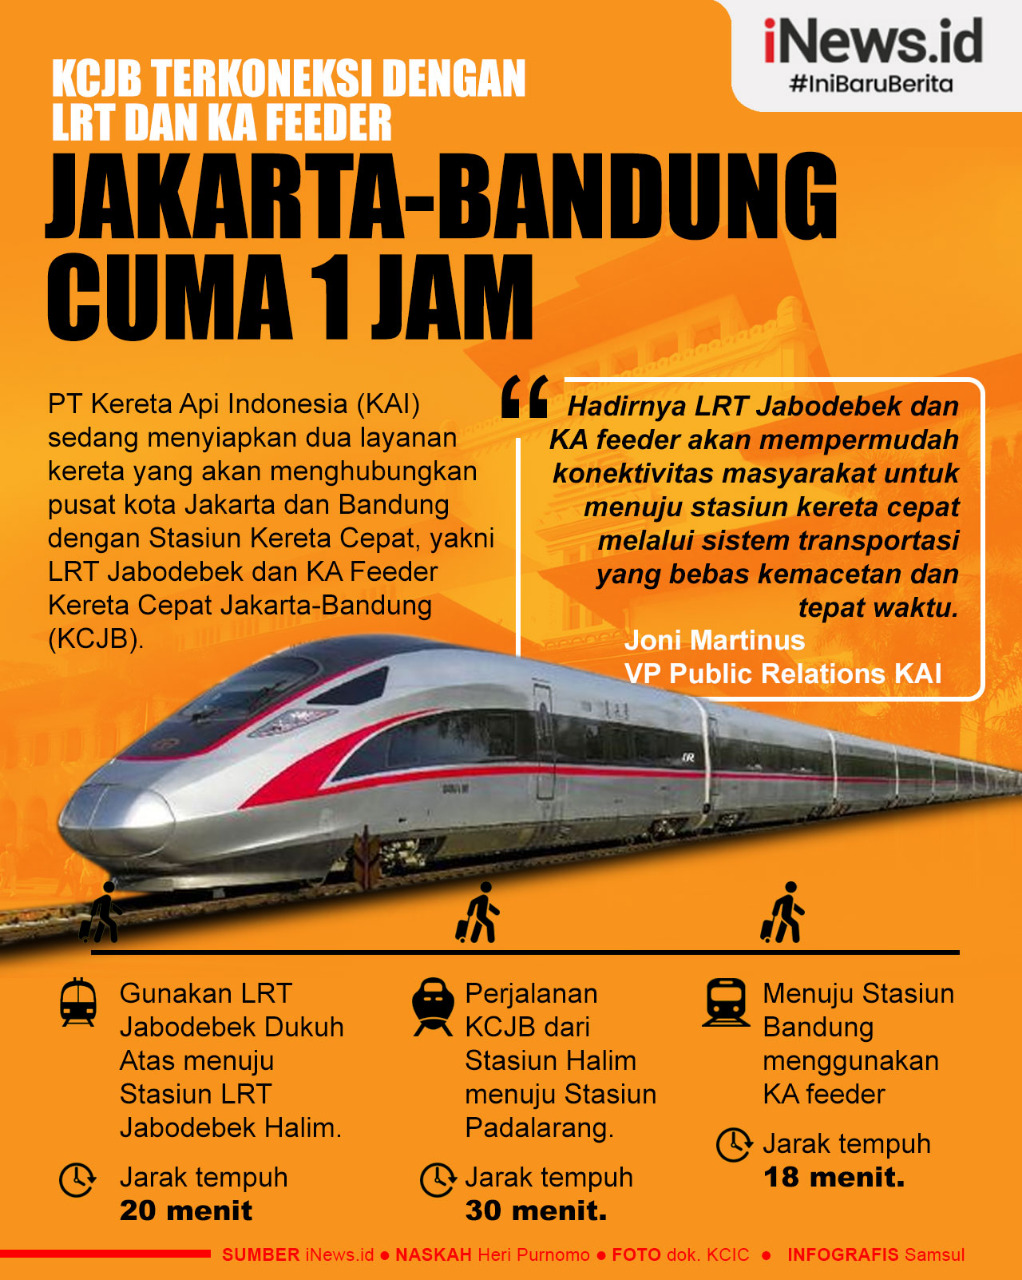 Infografis KCJB Terkoneksi dengan LRT dan KA Feeder, Jakarta-Bandung Cuma 1 Jam. (Desain: Samsul)